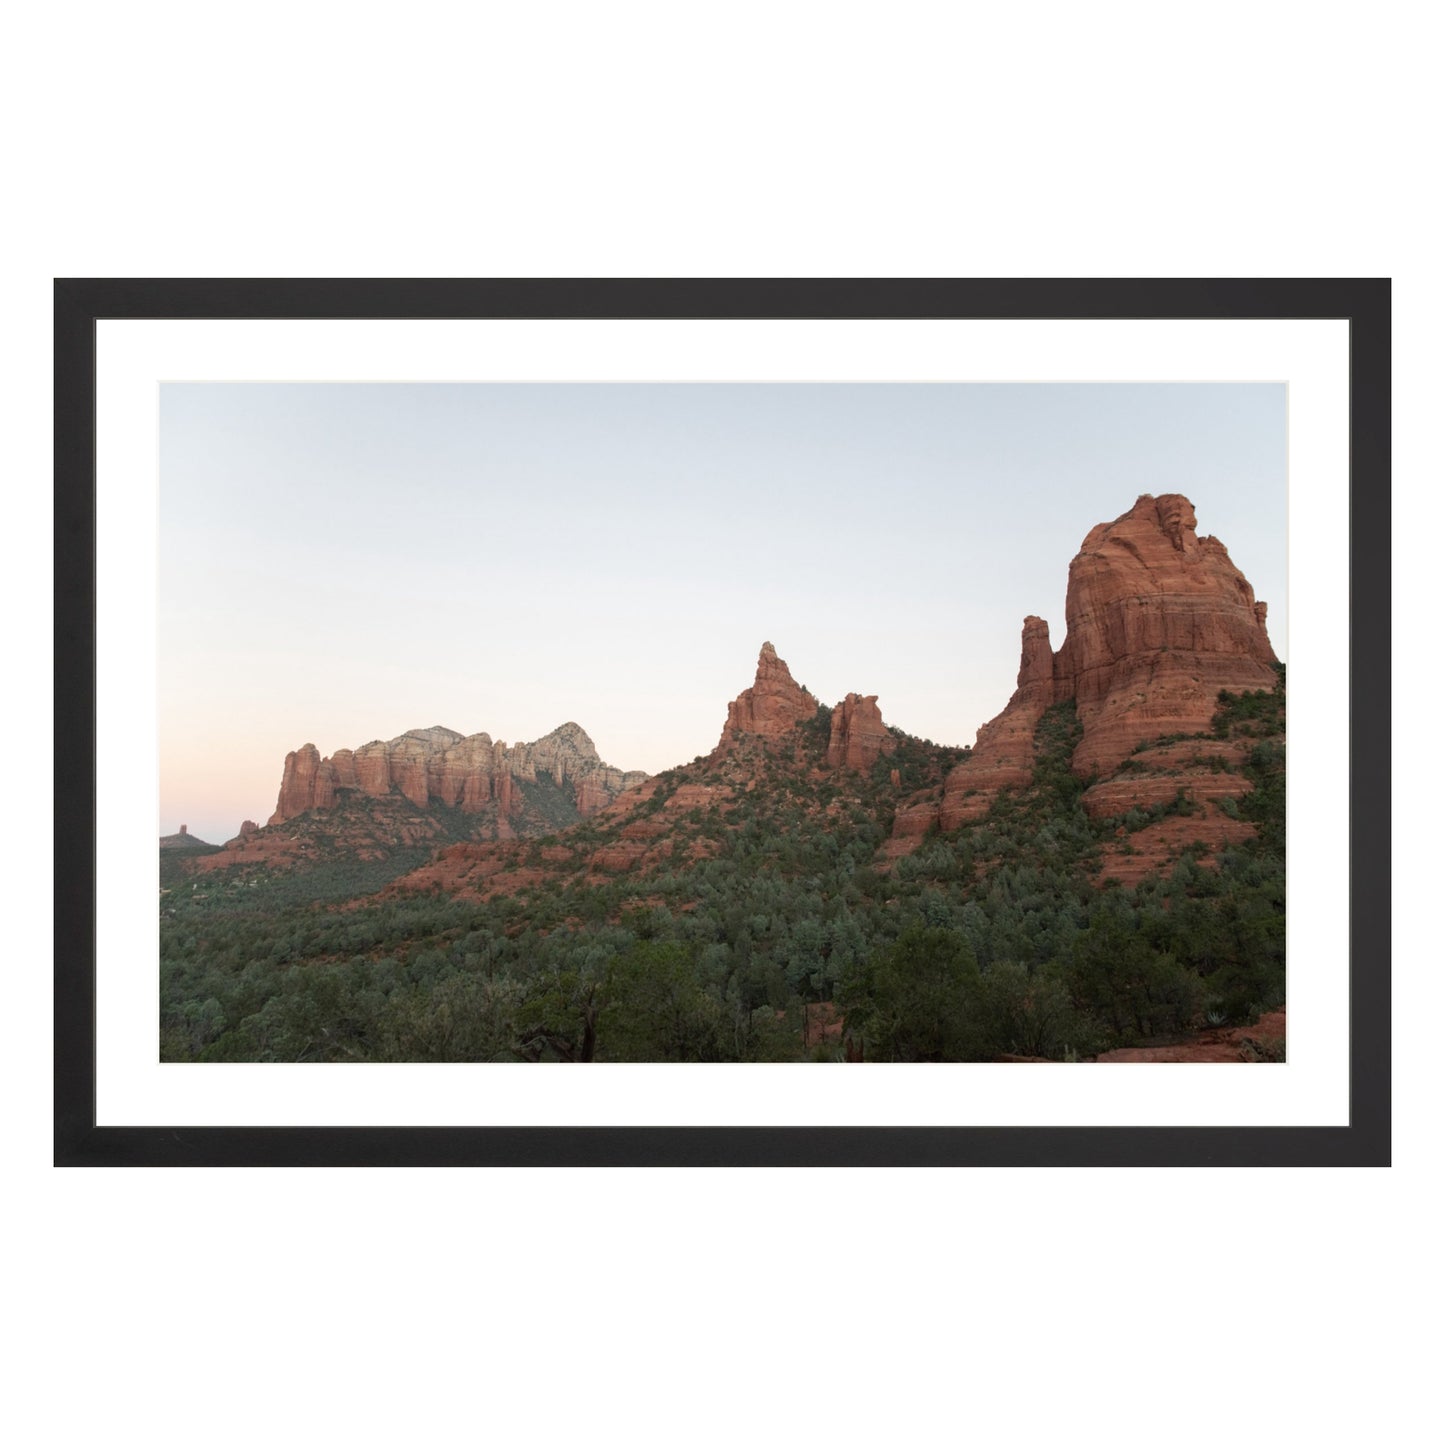 Photograph of Boynton Canyon in Sedona Arizona framed in black with white mat